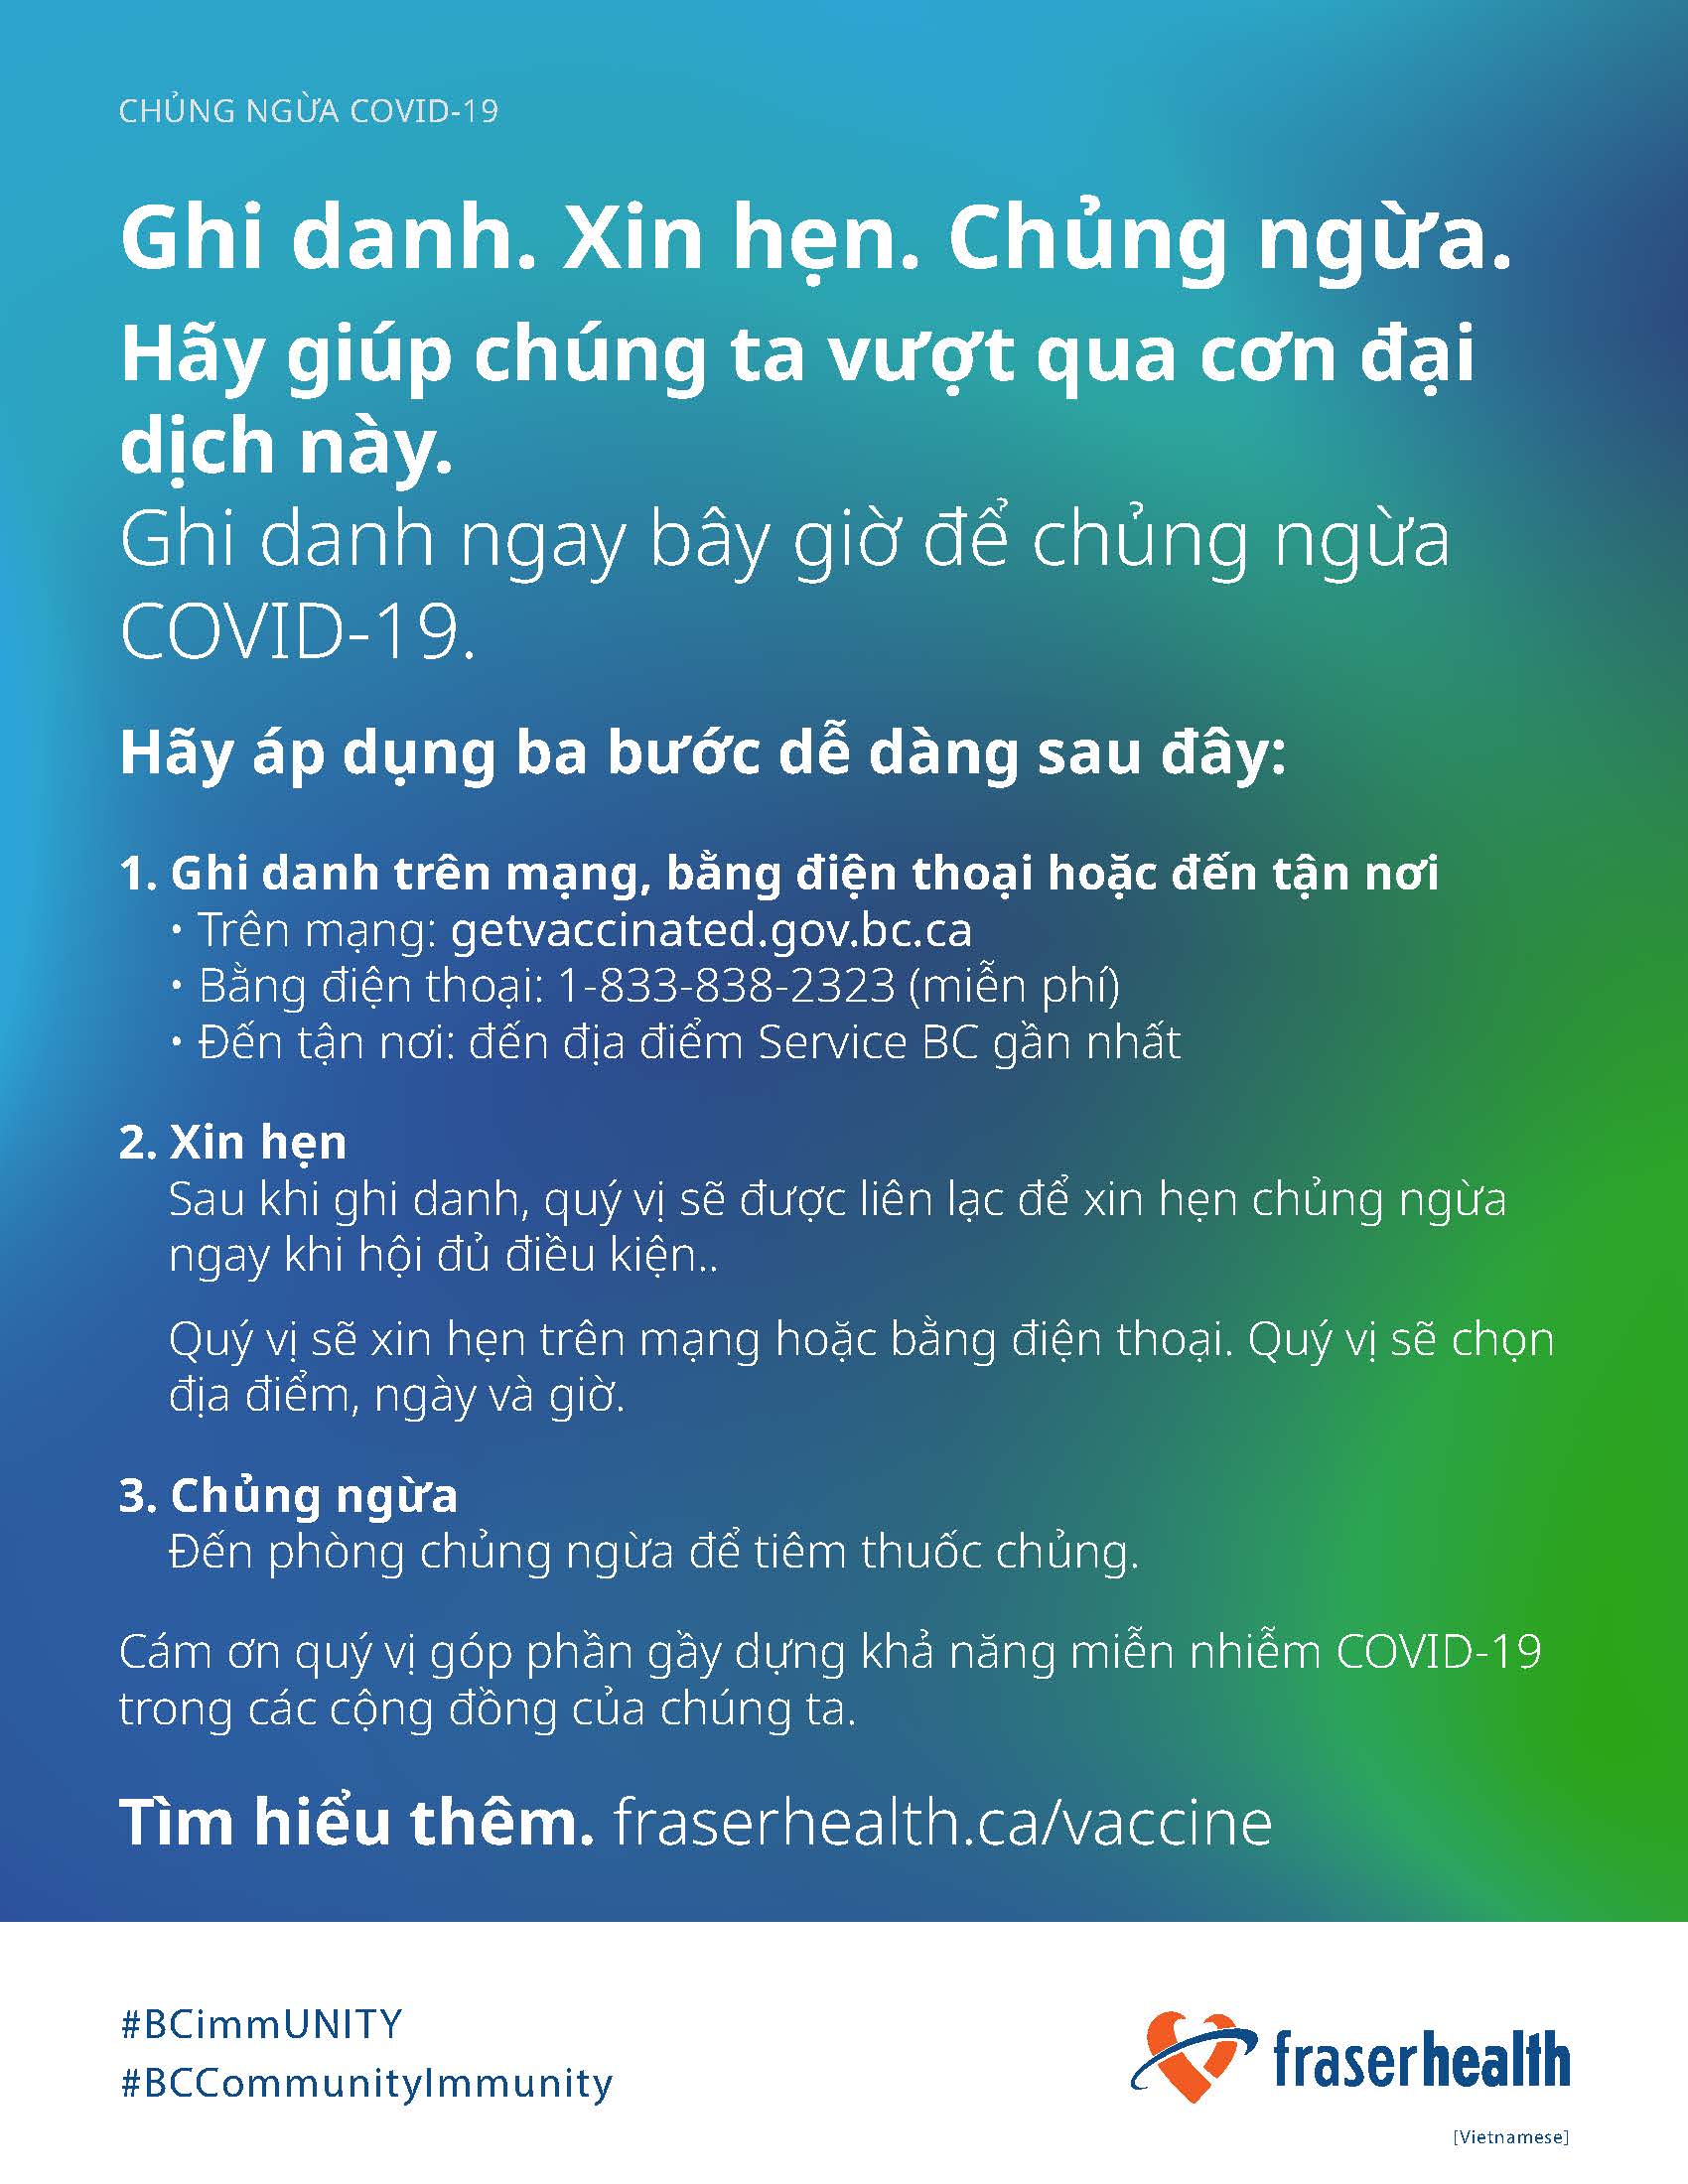 Vaccine registration for Vietnamese in colour